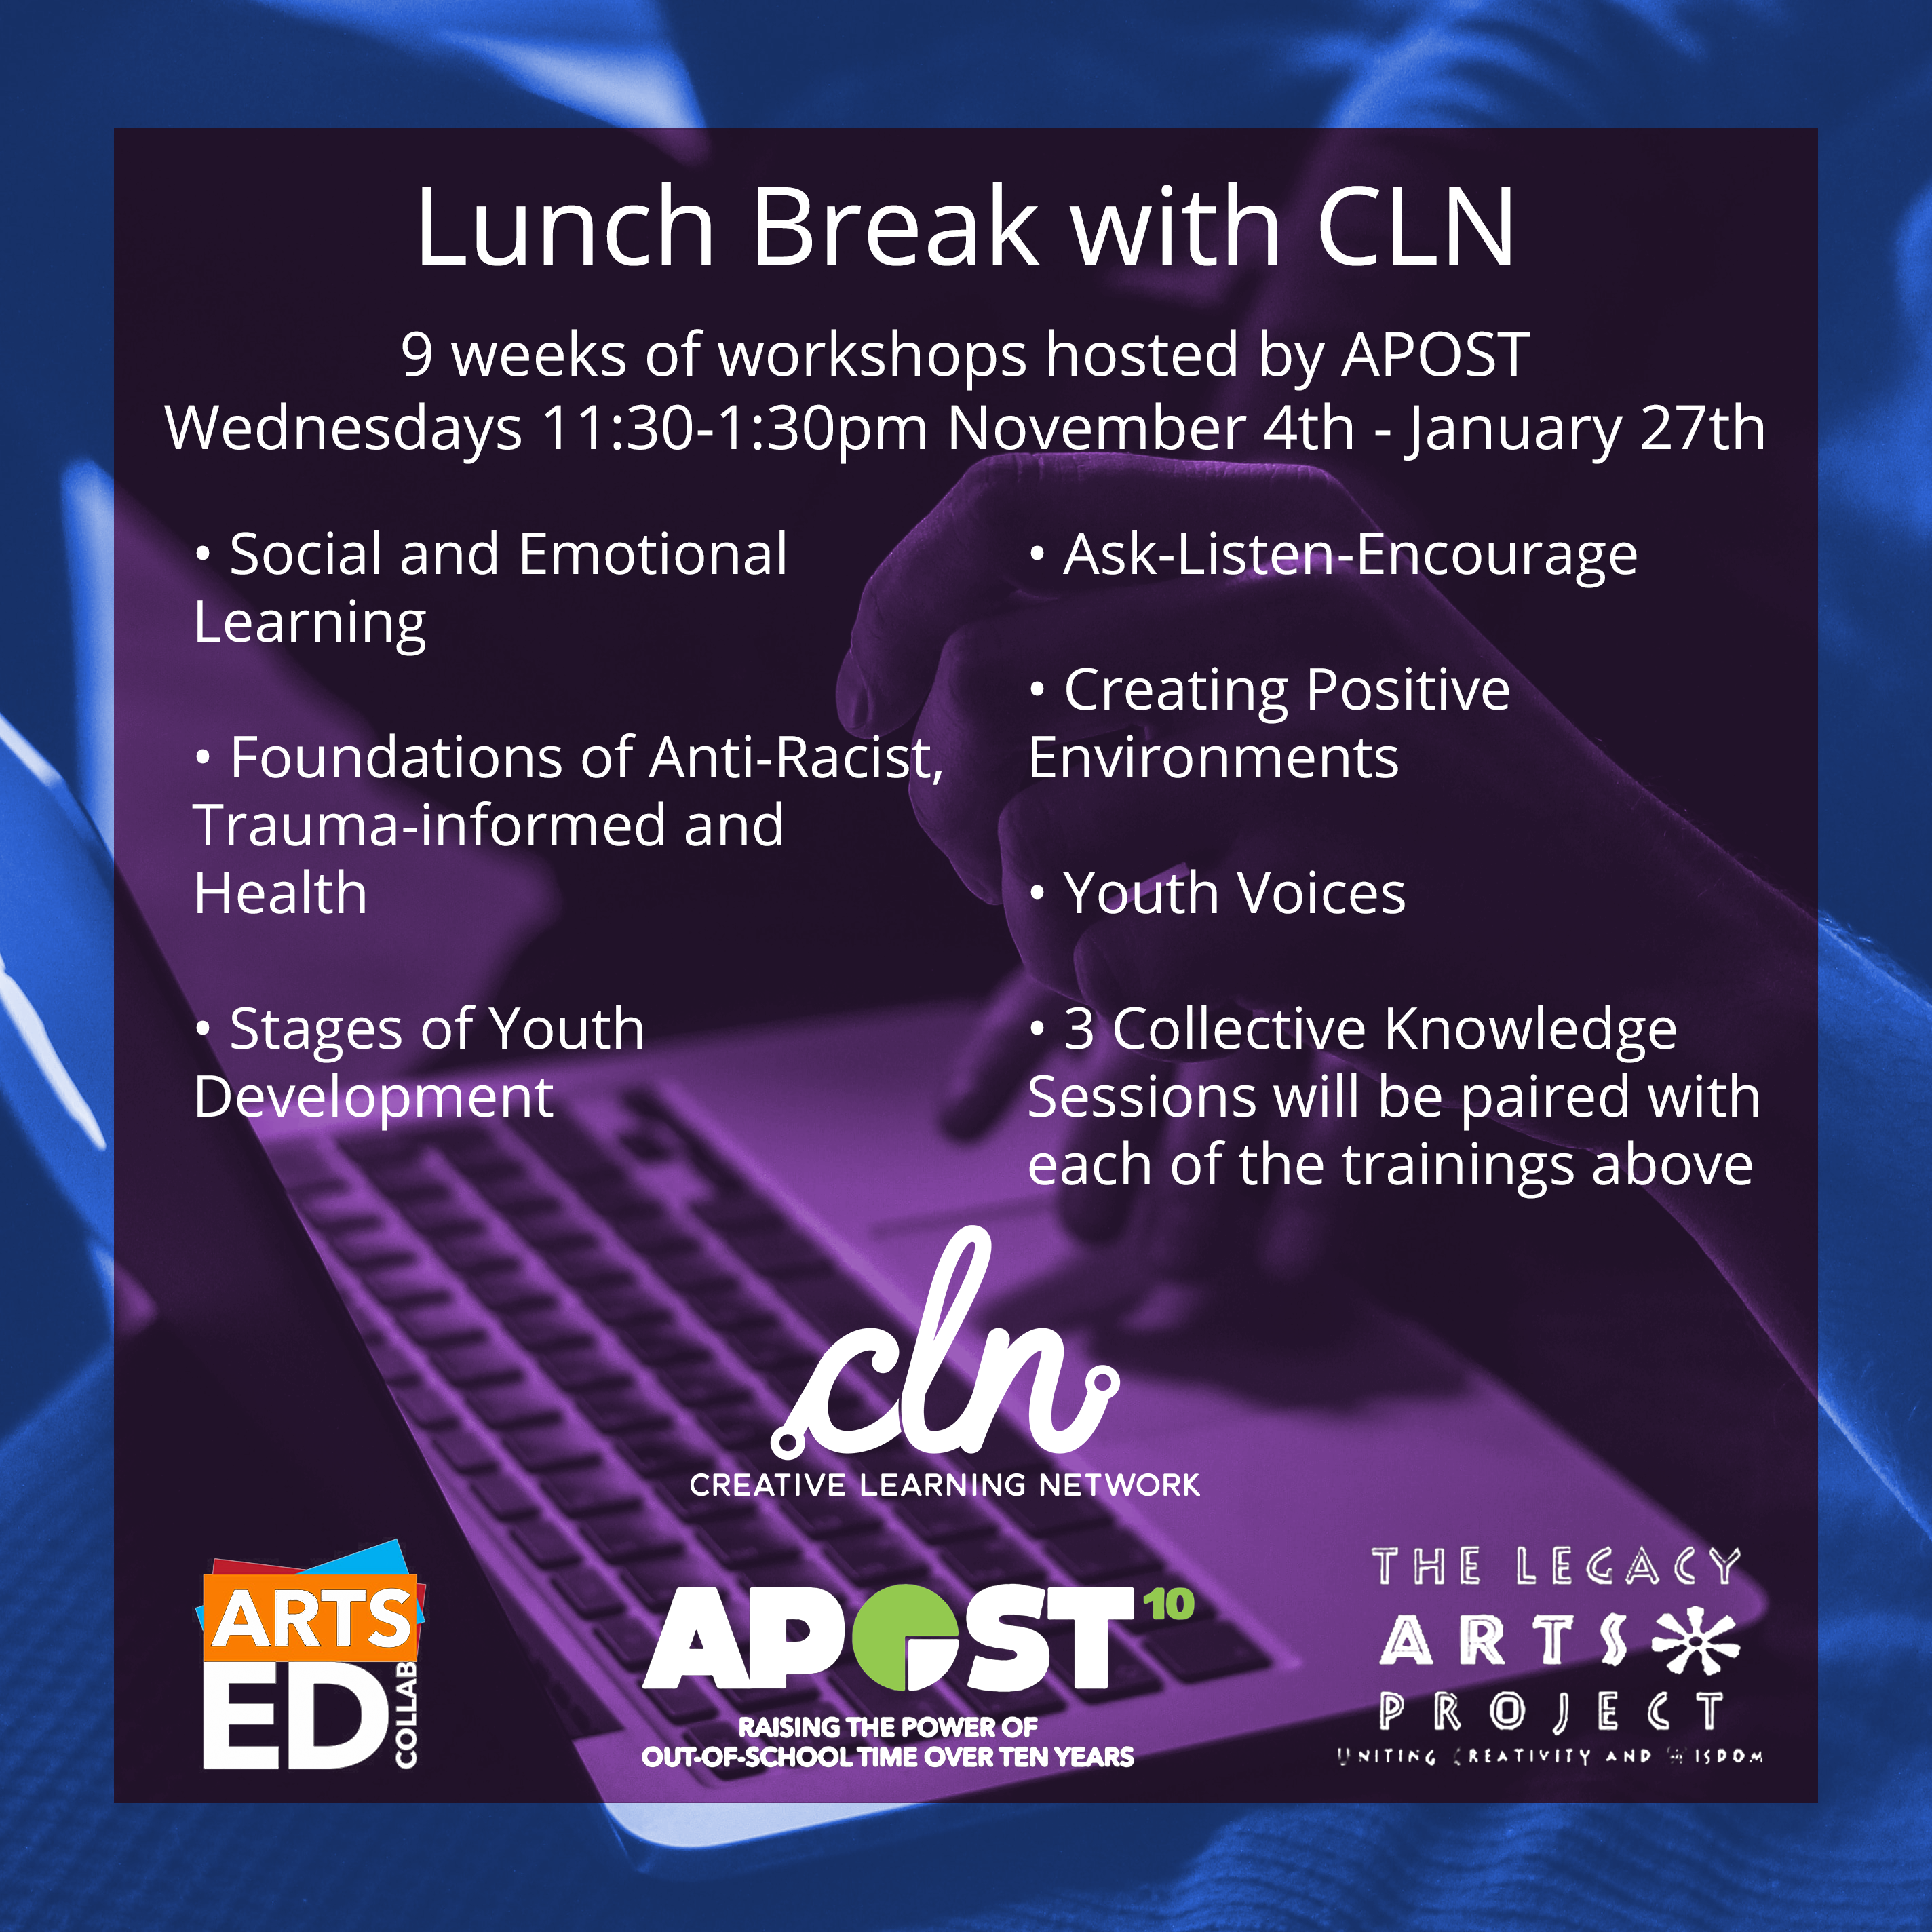 Lunch Break with CLN flyer